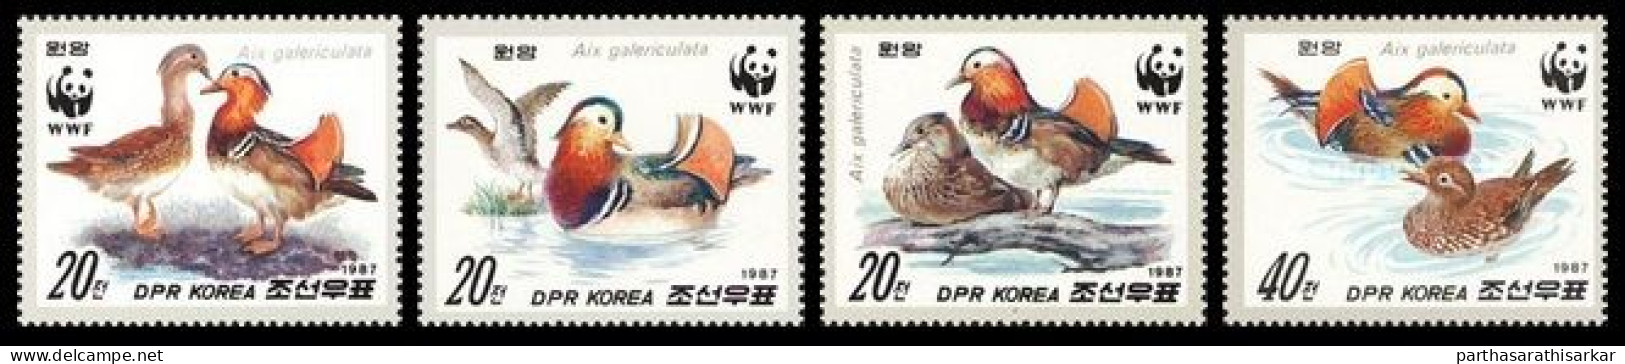 NORTH KOREA 1987 WWF WORLD NATURE CONSERVATION MANDARIN DUCKS COMPLETE SET MNH - Unused Stamps